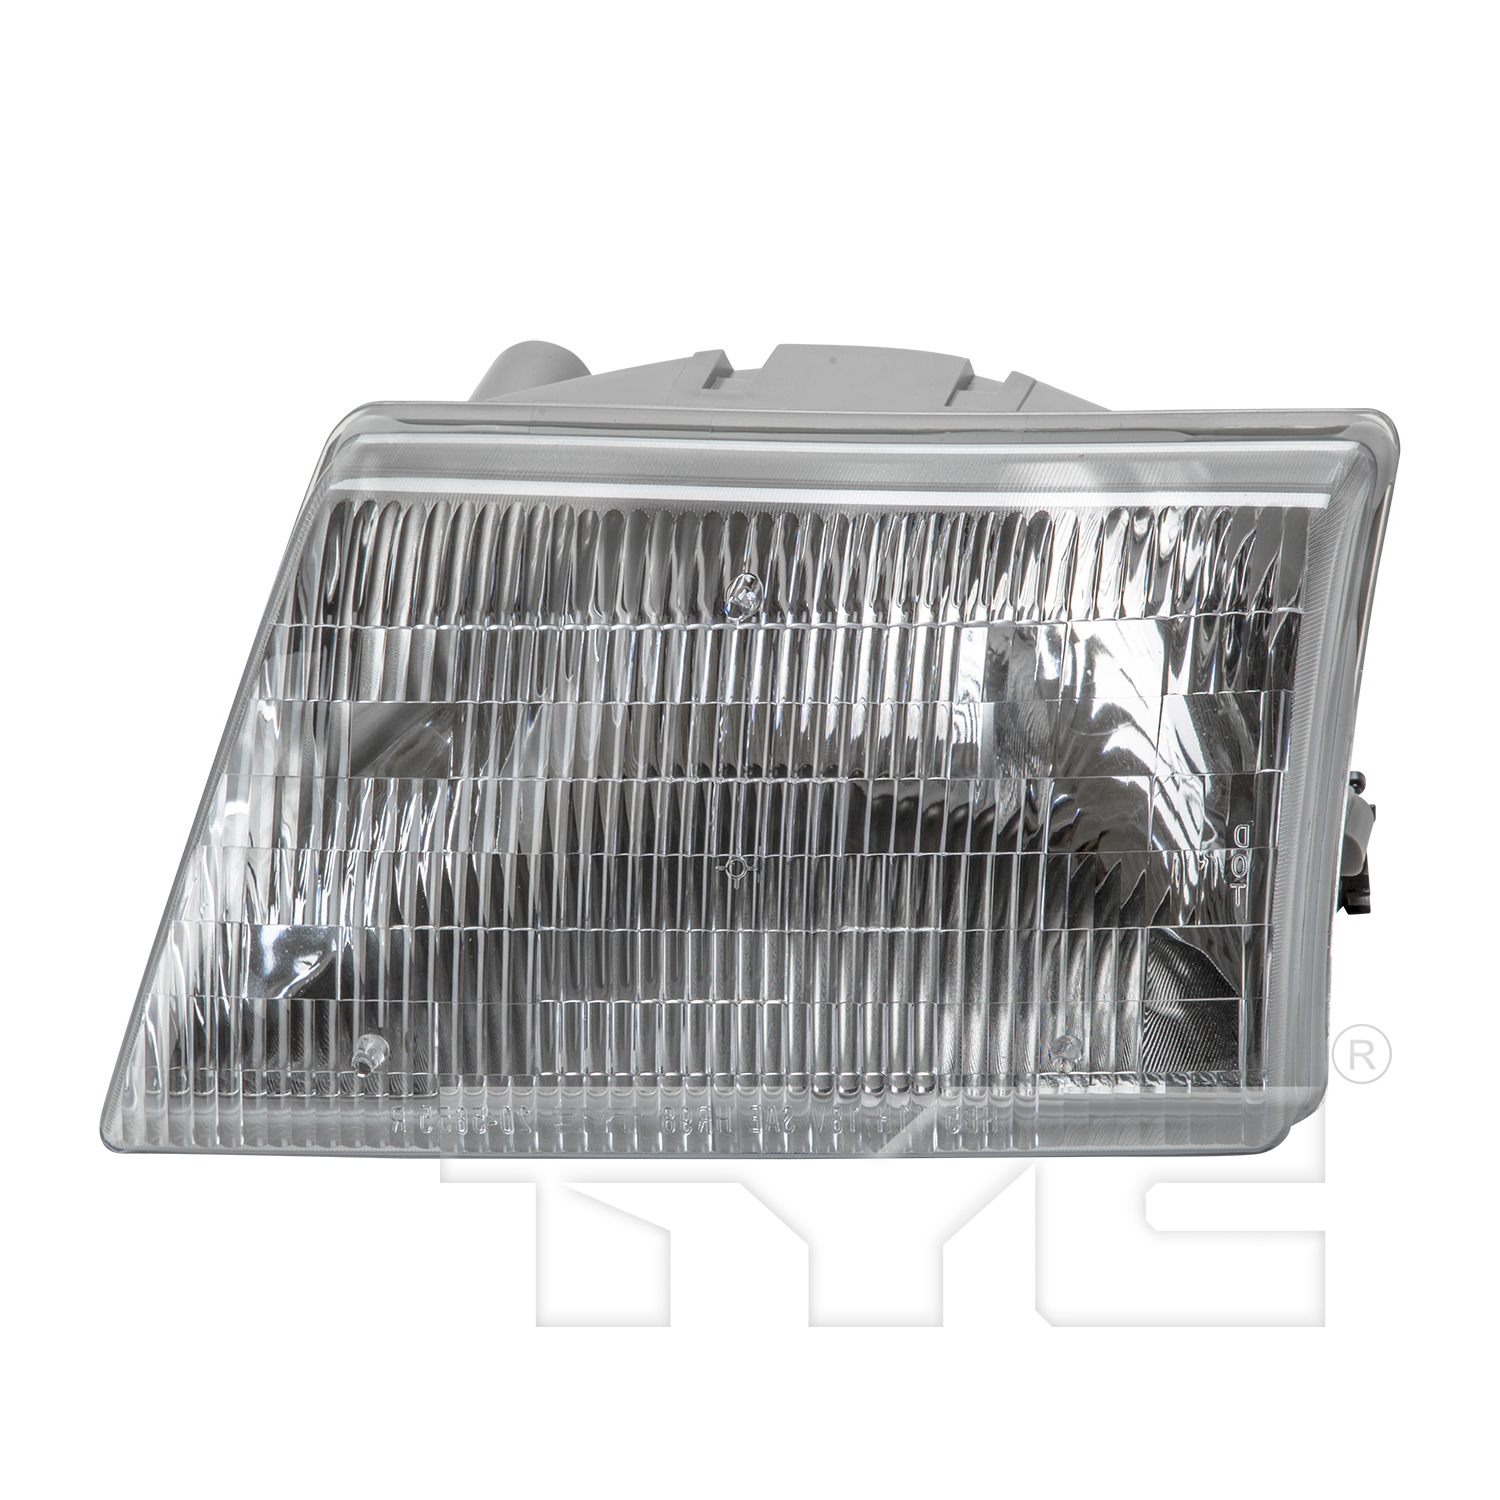 Aftermarket HEADLIGHTS for MAZDA - B2500, B2500,98-00,LT Headlamp assy composite